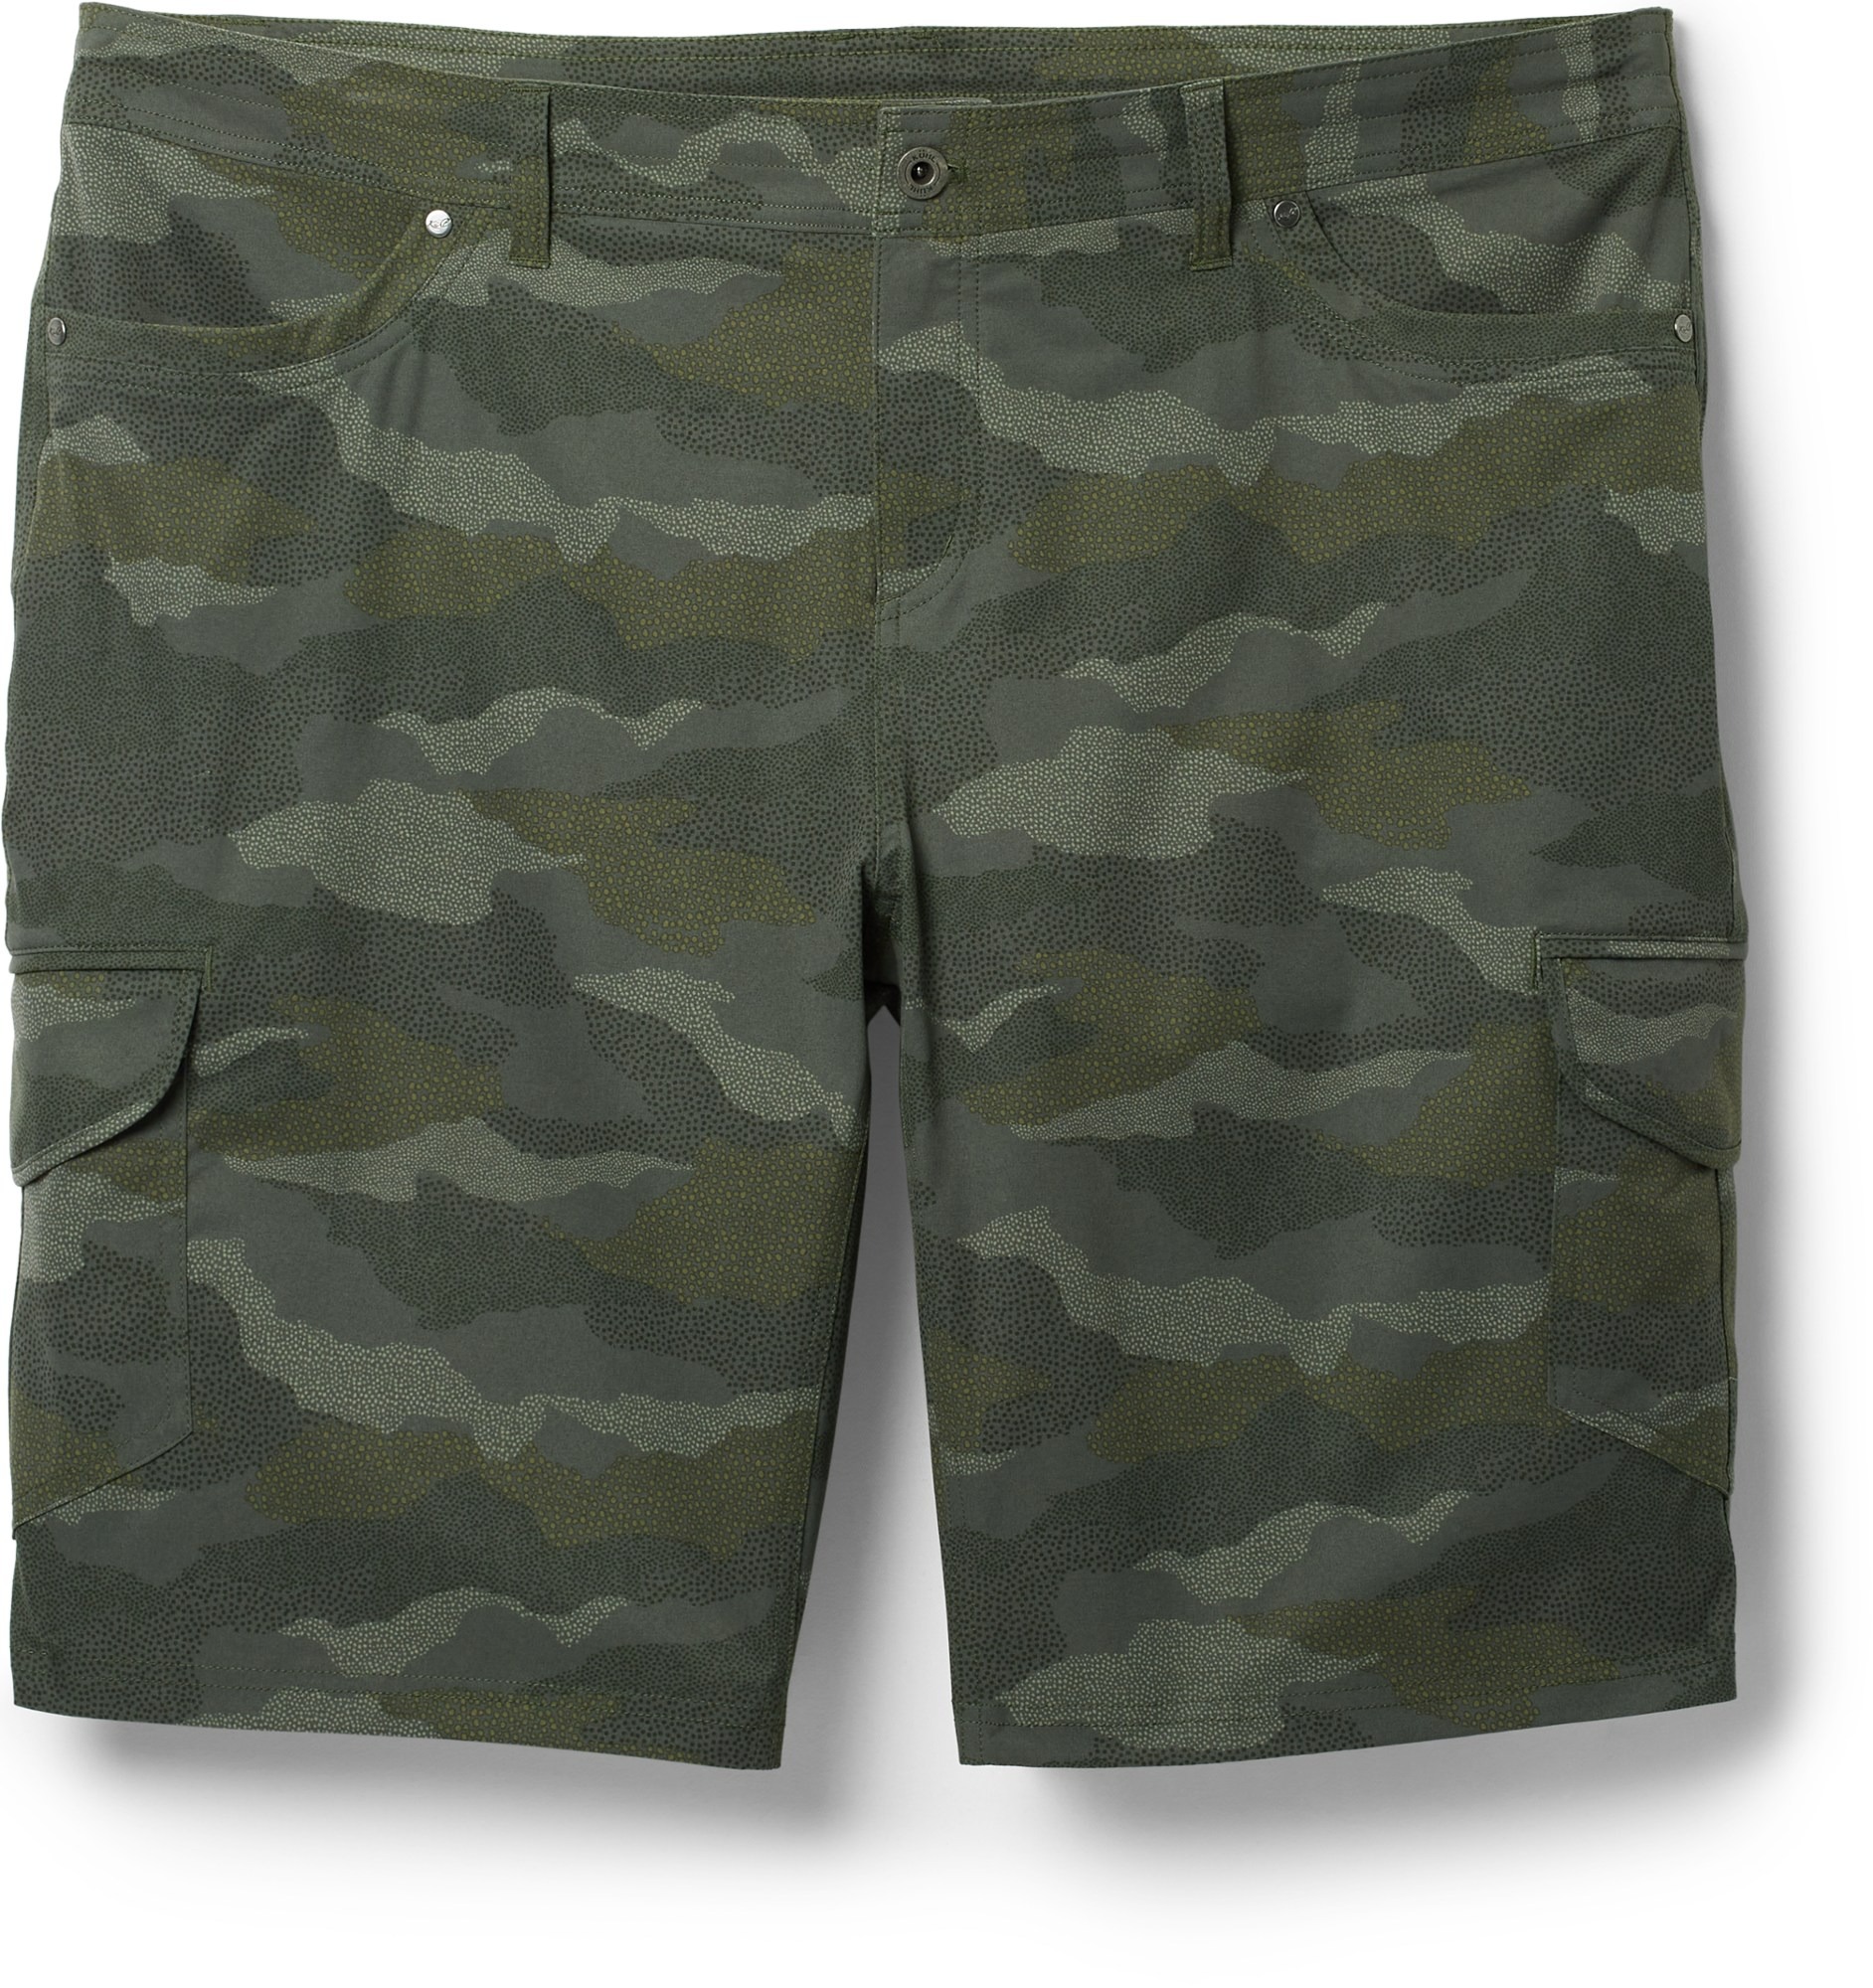 Kuhl Freeflex Cargo Shorts (Olive Camo) $25.83 at REI w/ Free Store Pickup